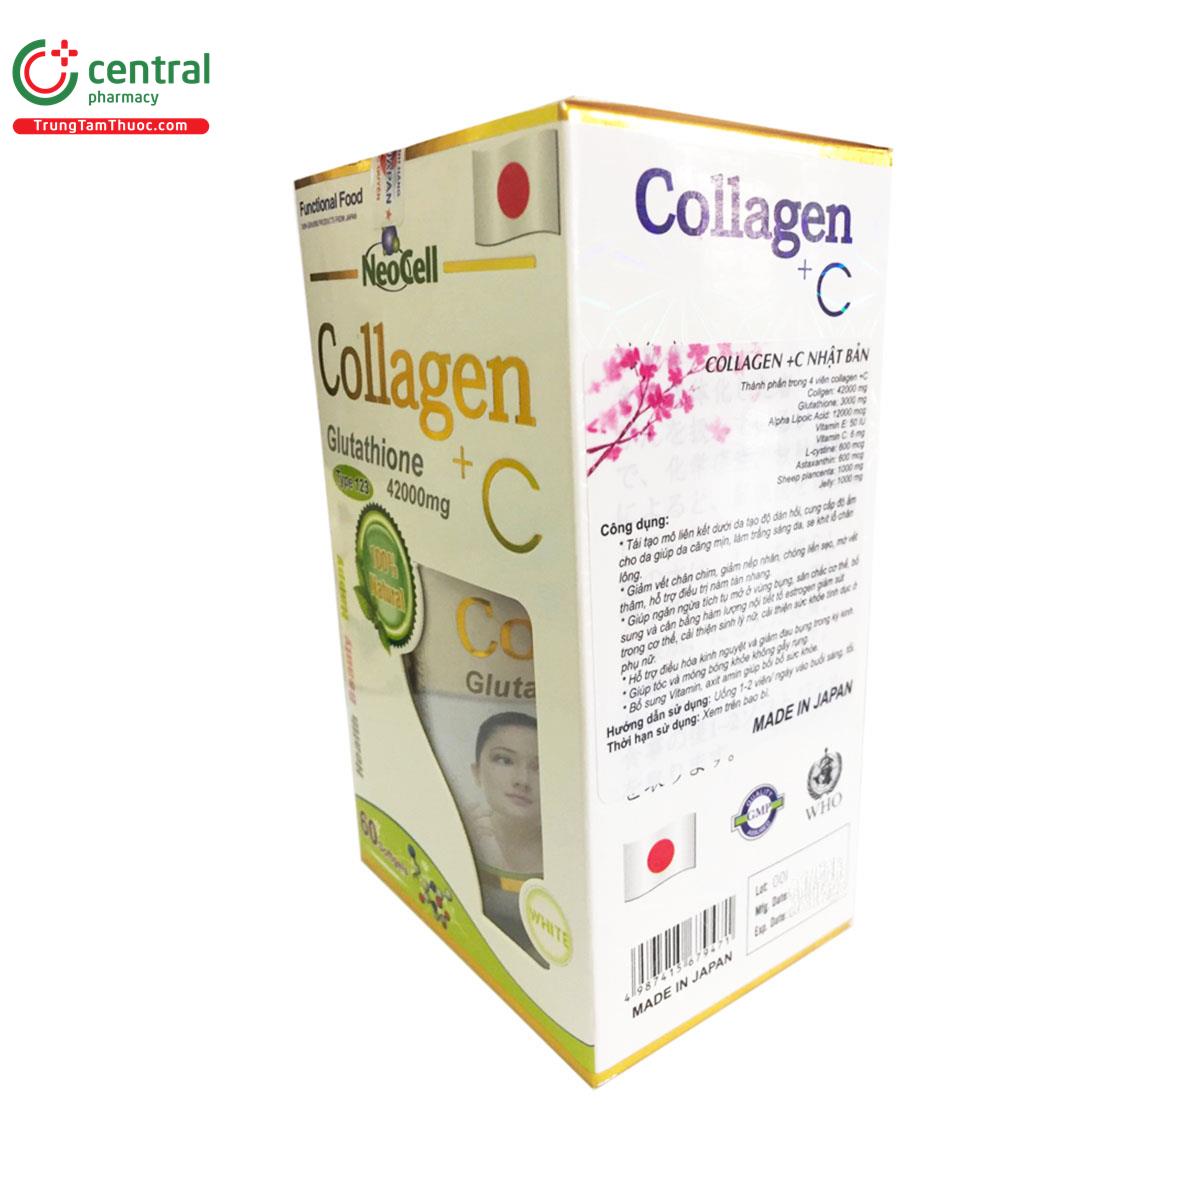 neocell collagen c glutathione 42000mg 1 B0311